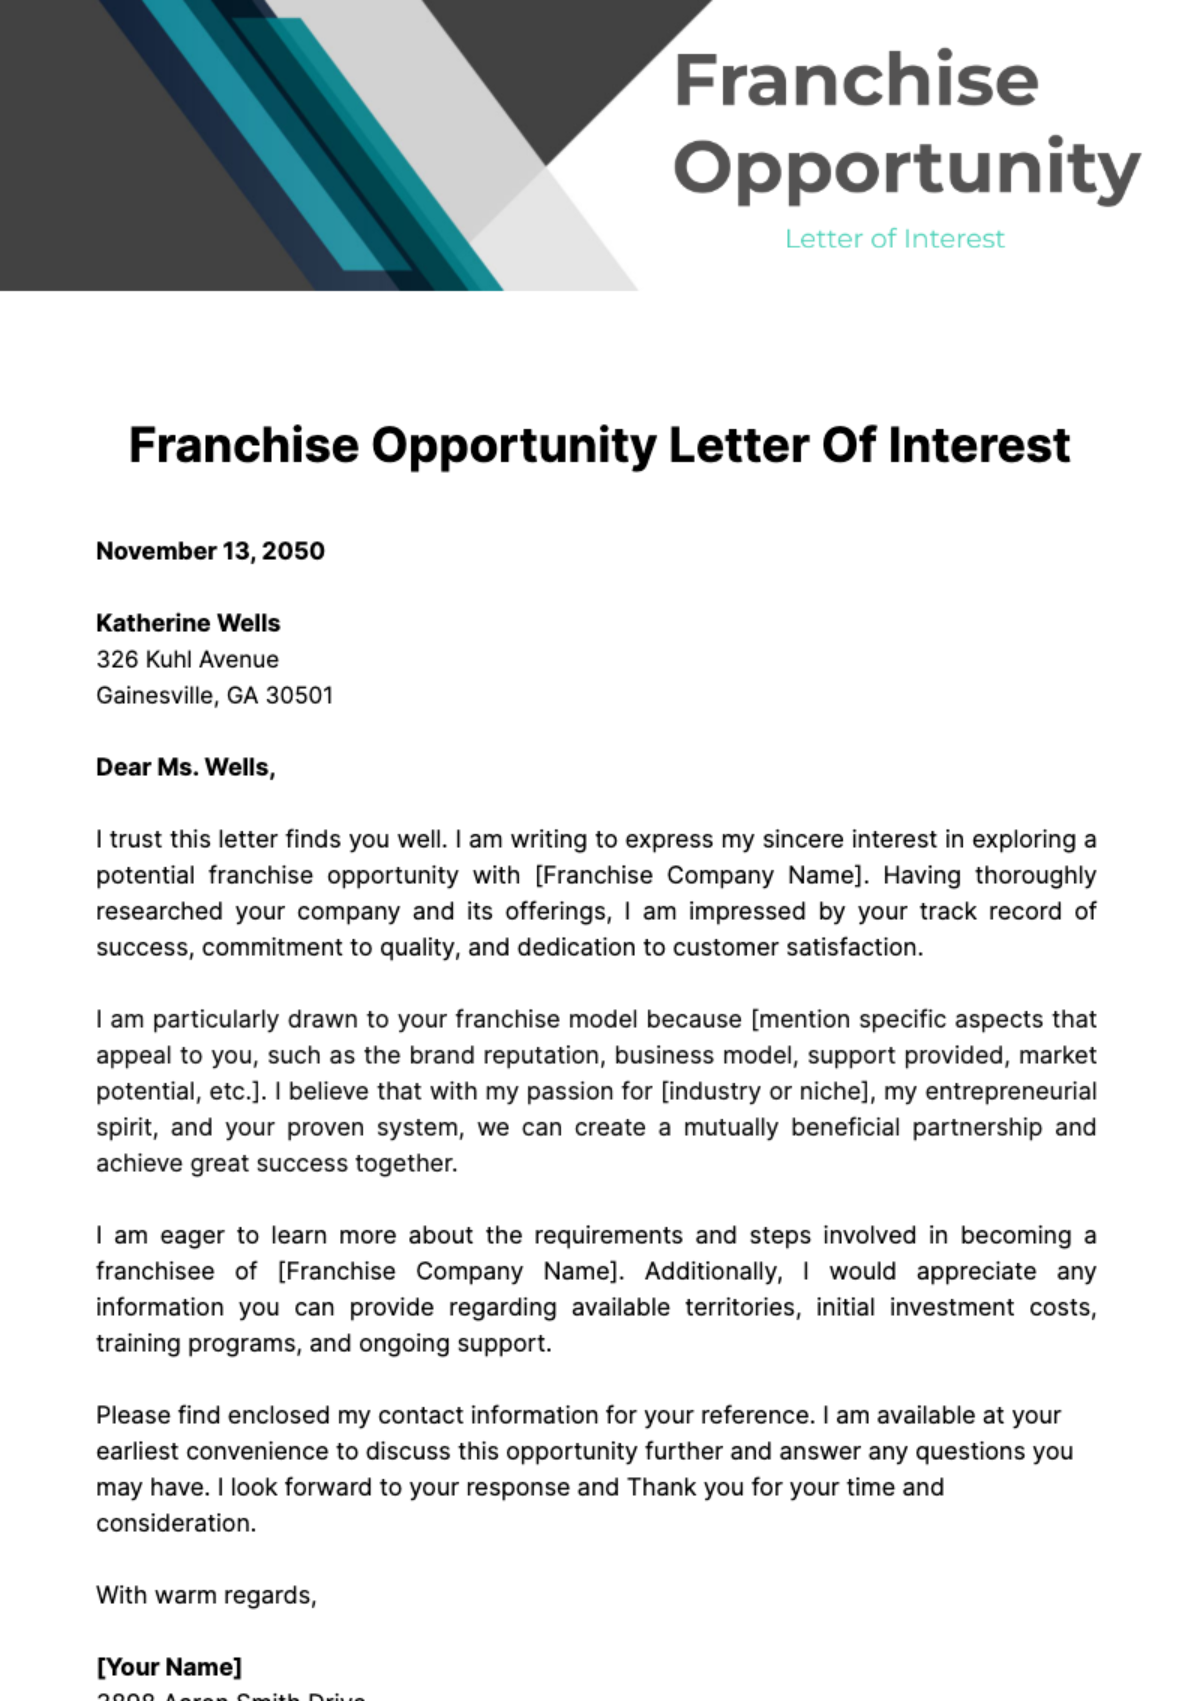 Franchise Opportunity Letter Of Interest Template